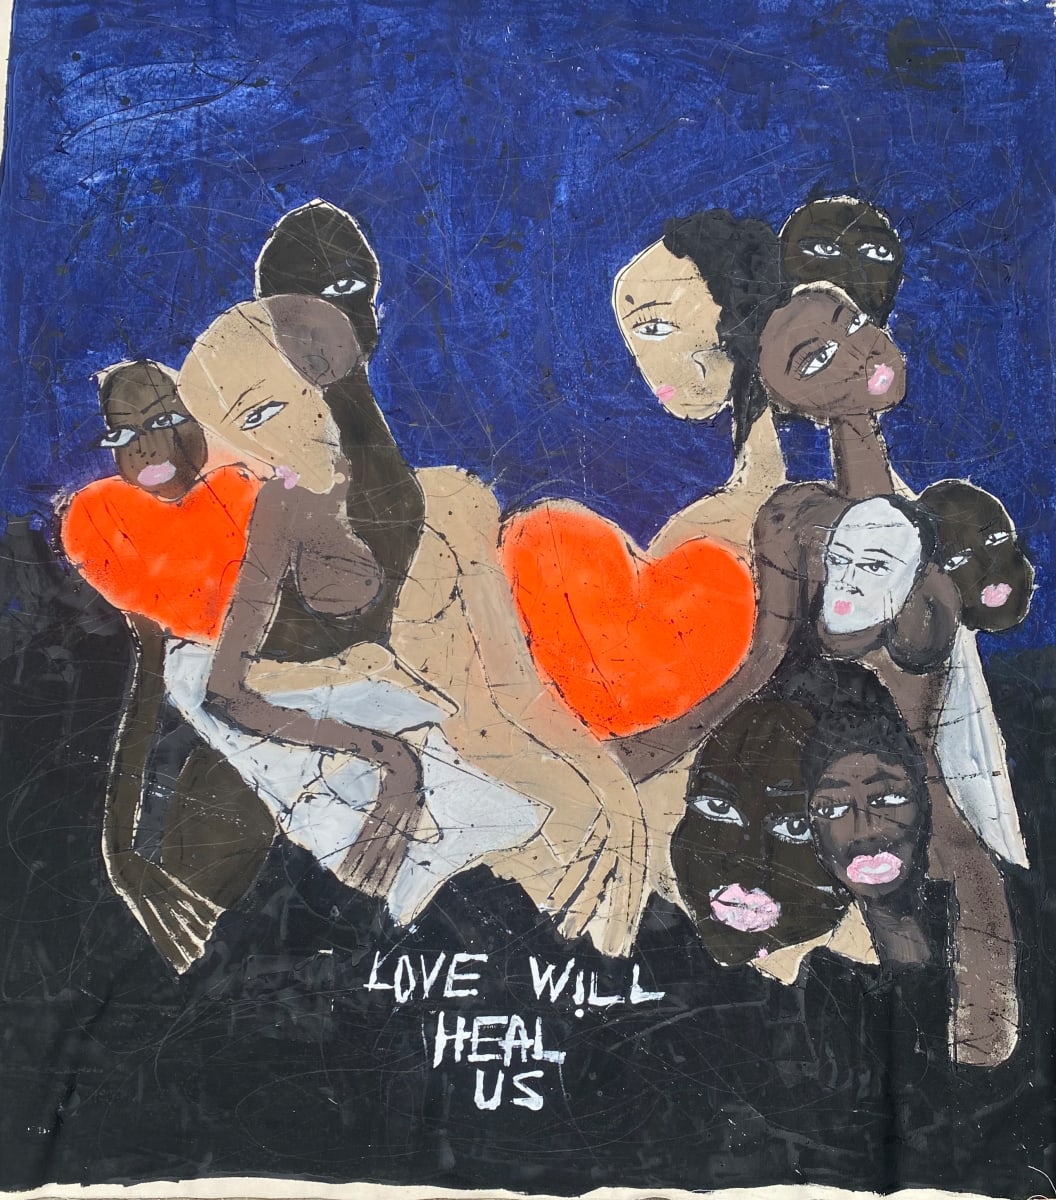 Love will heal us by Miles Regis 